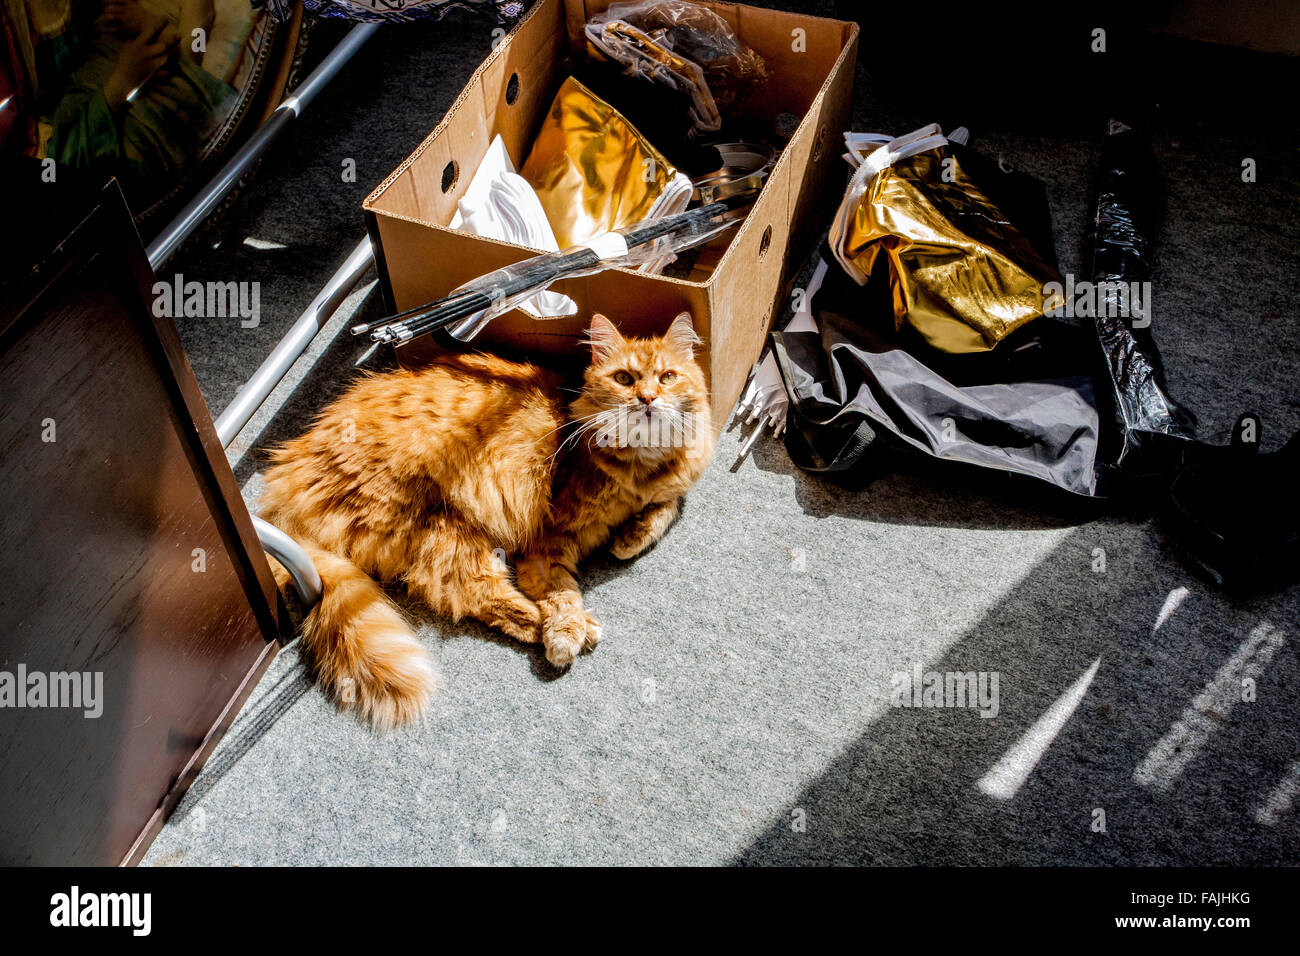 Red cat in photographer's studio Stock Photo